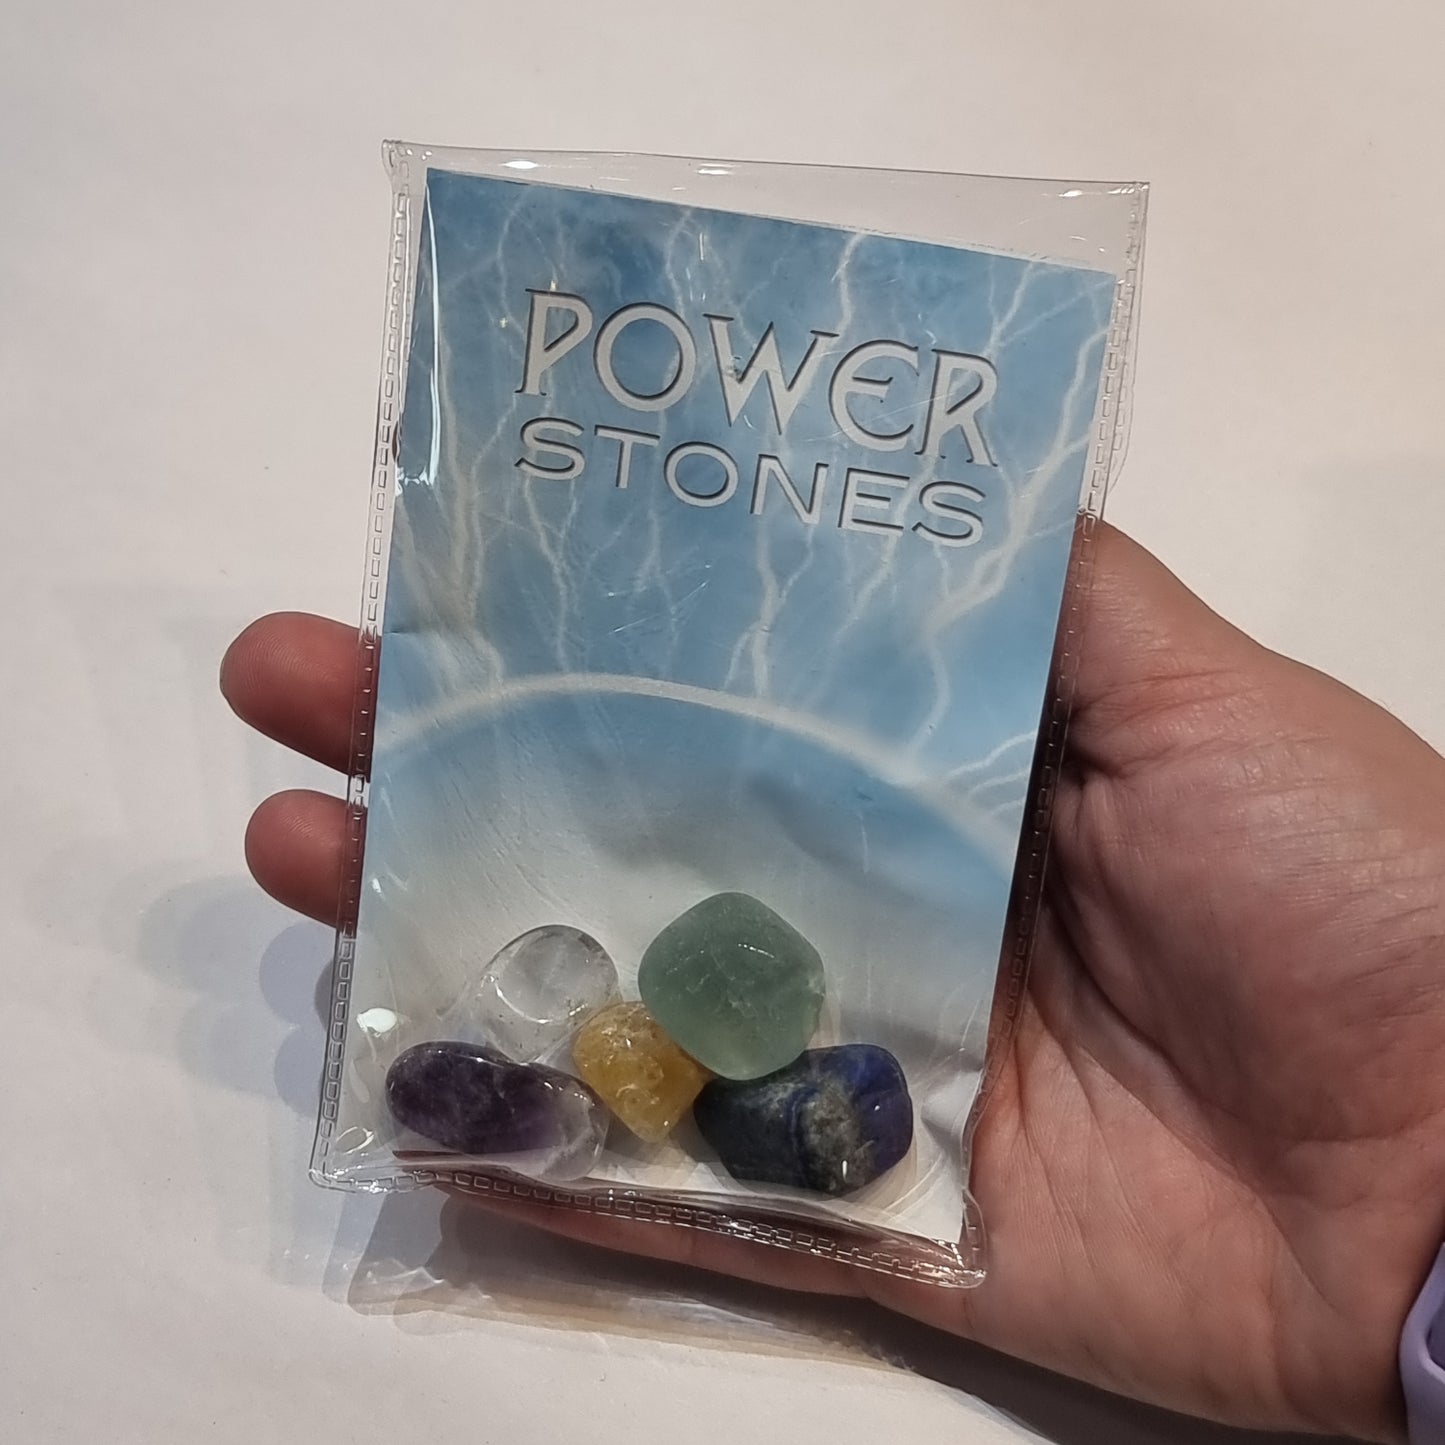 Power stones - Rivendell Shop